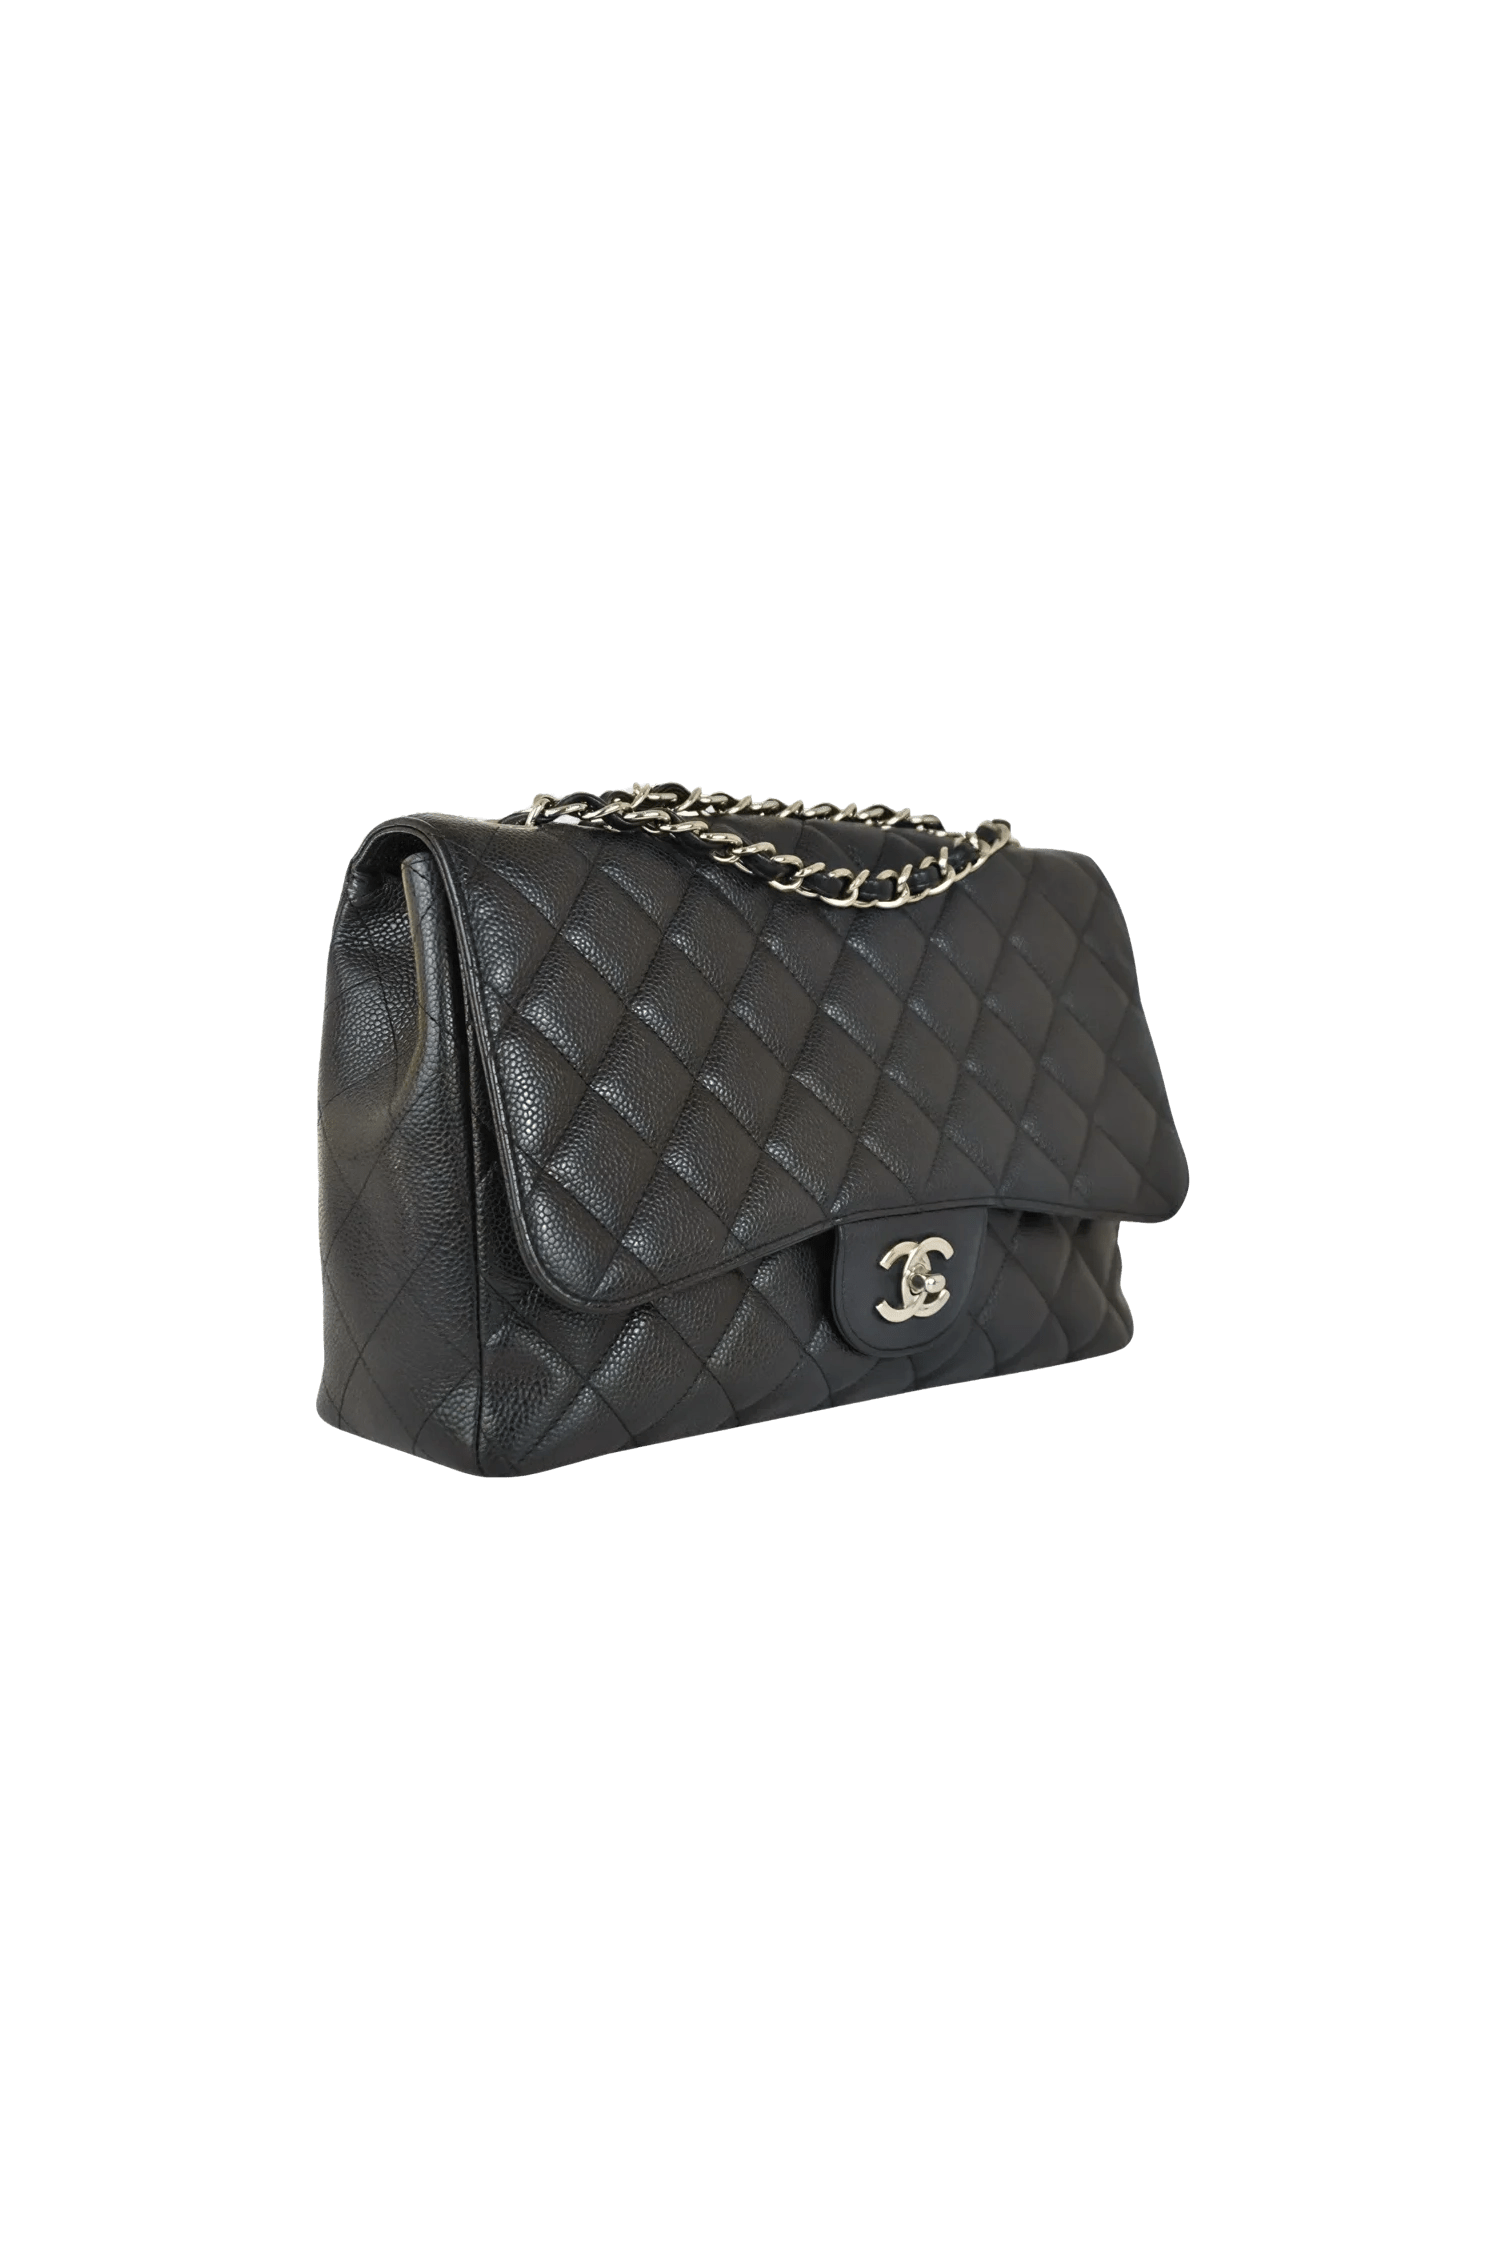 Chanel Jumbo Caviar Single Flap Bag SHW 2009-2010